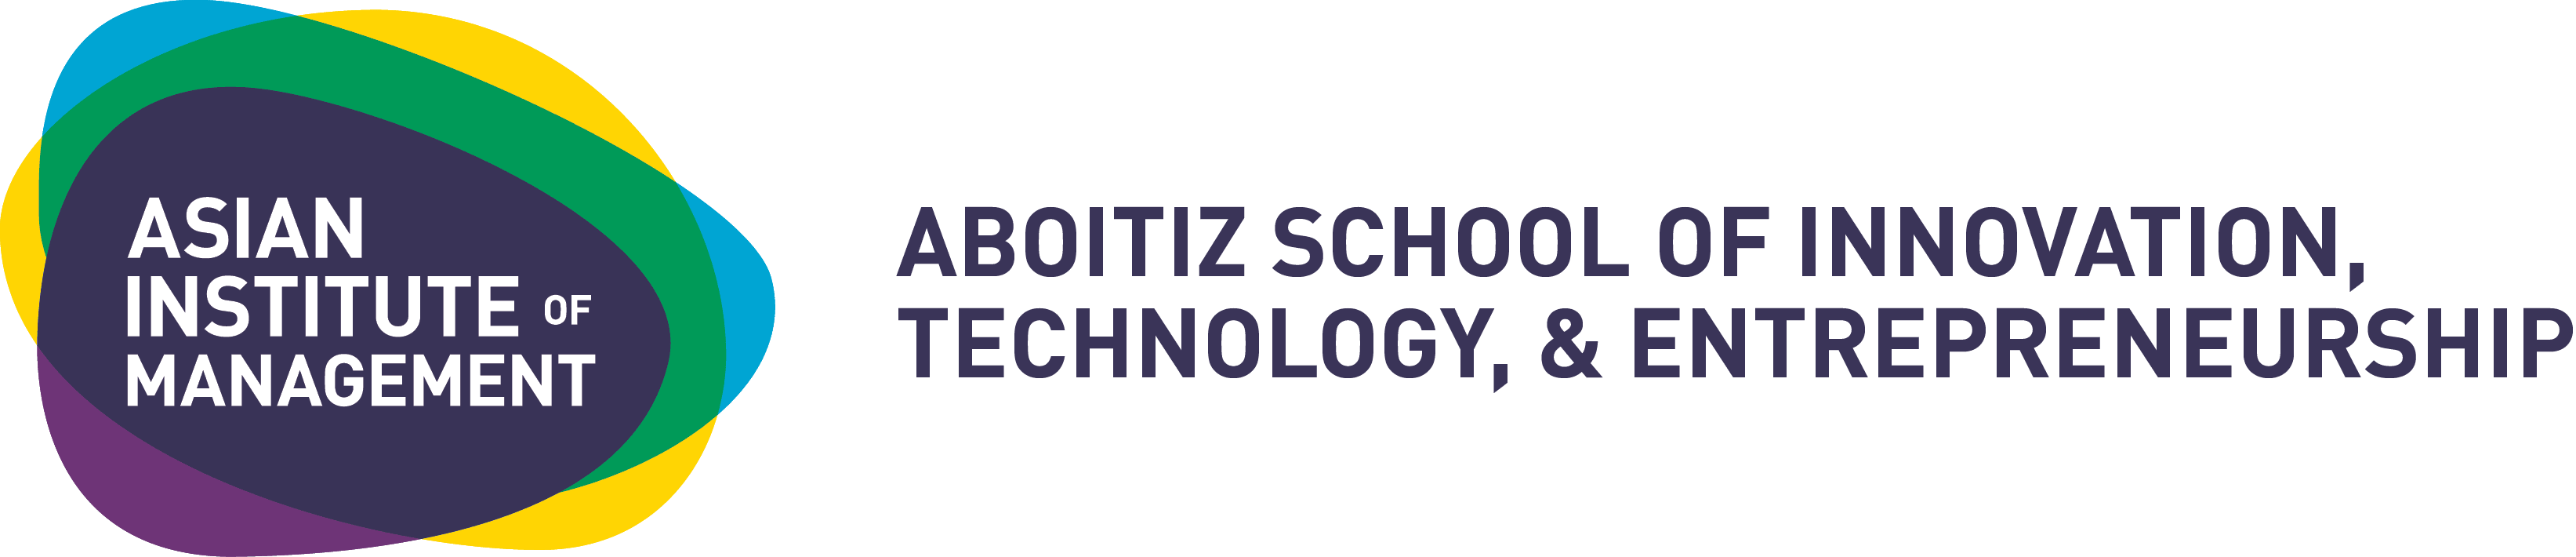 AIM Aboitiz School of Innovation, Technology, & Entrepreneurship